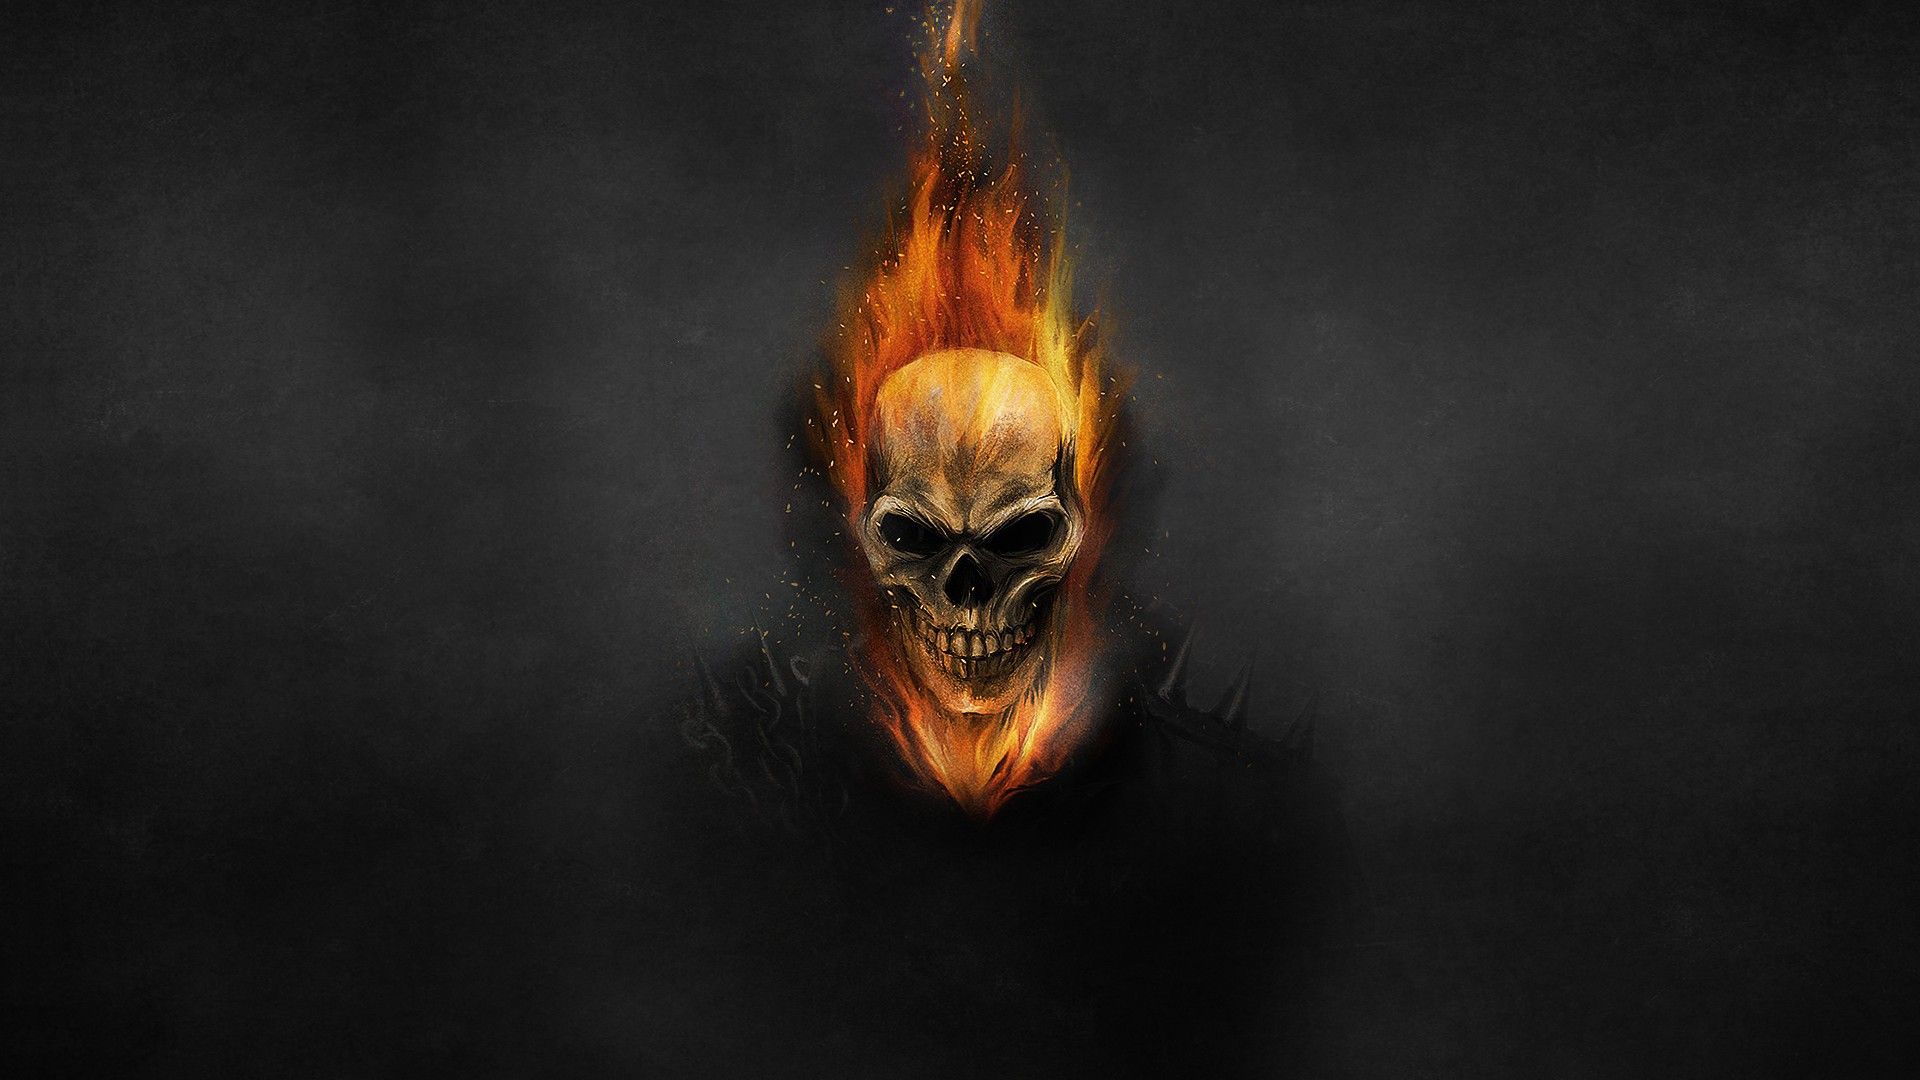 Ghost Rider, skeleton 1920x1080 (1080p) - Wallpaper - HD Wallpapers